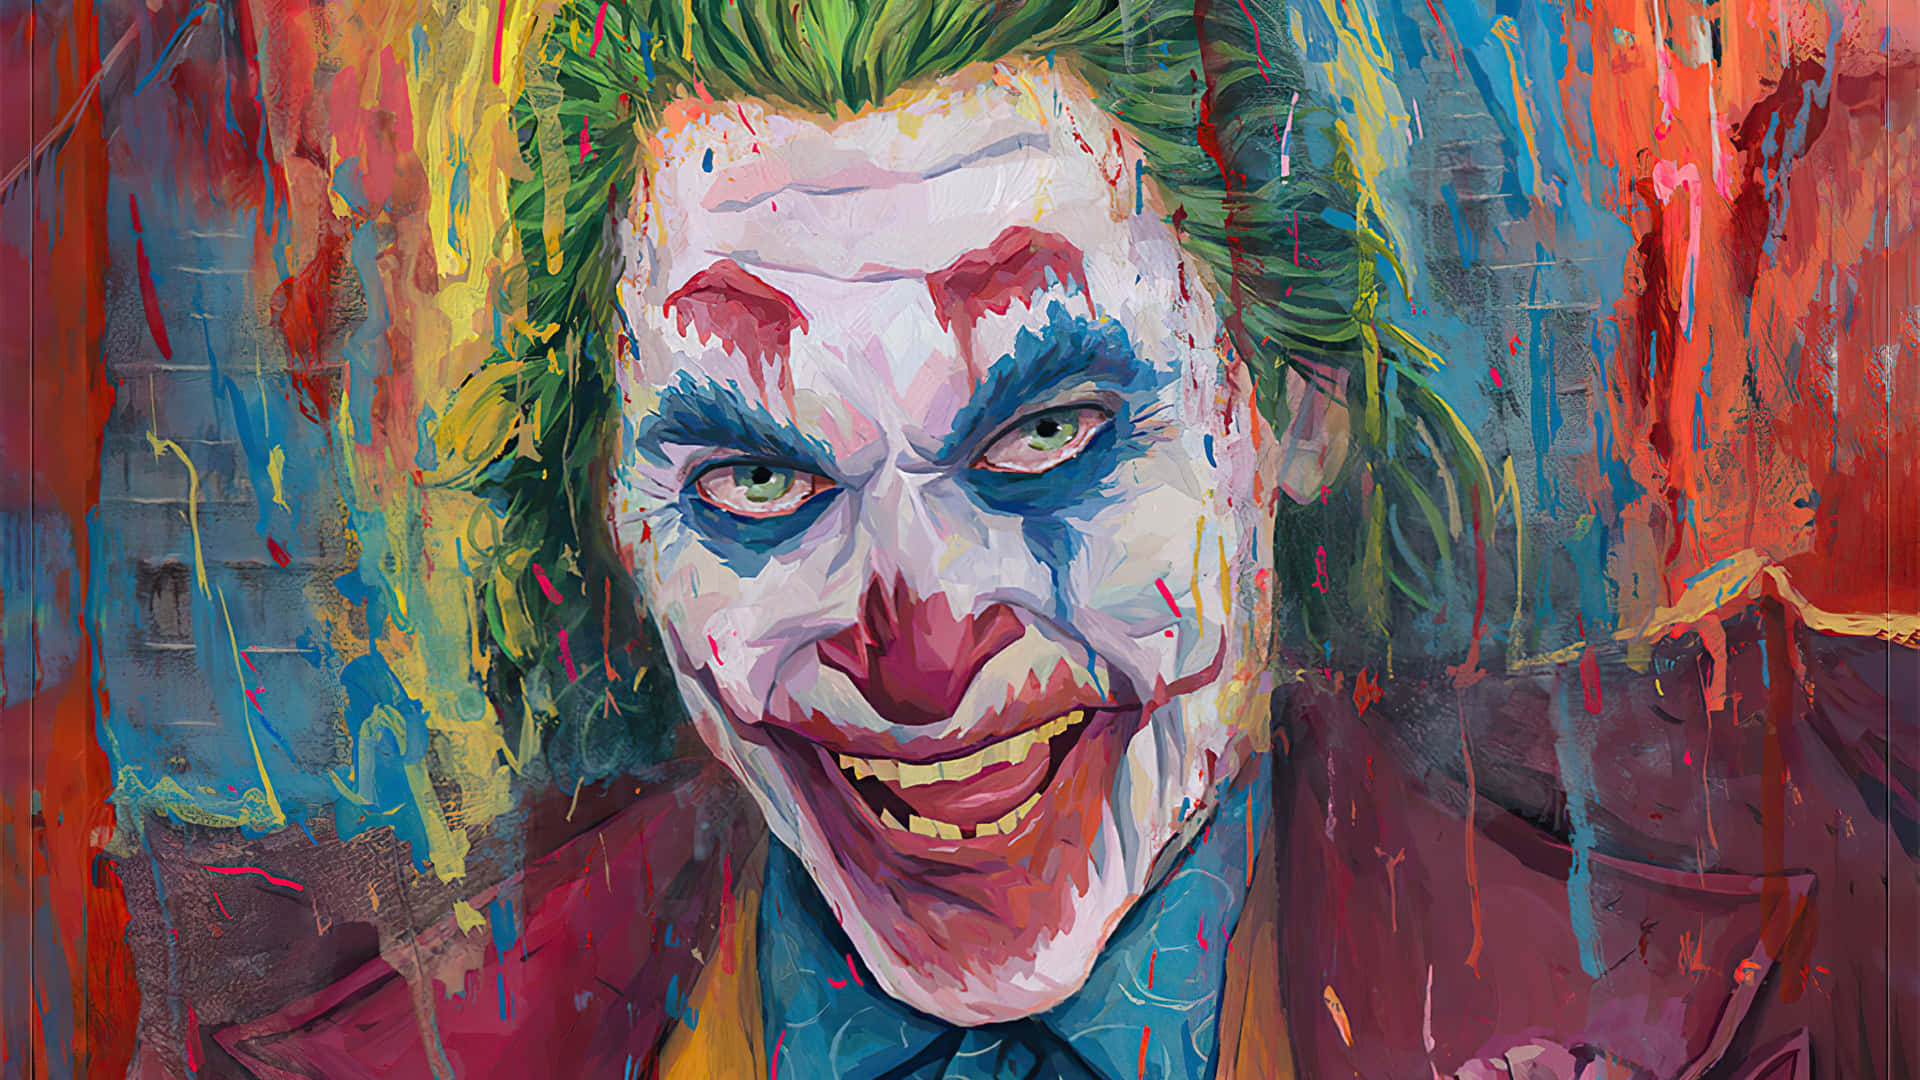 "Evocative Joker Art: A Vibrant Display of Dark Emotions" Wallpaper